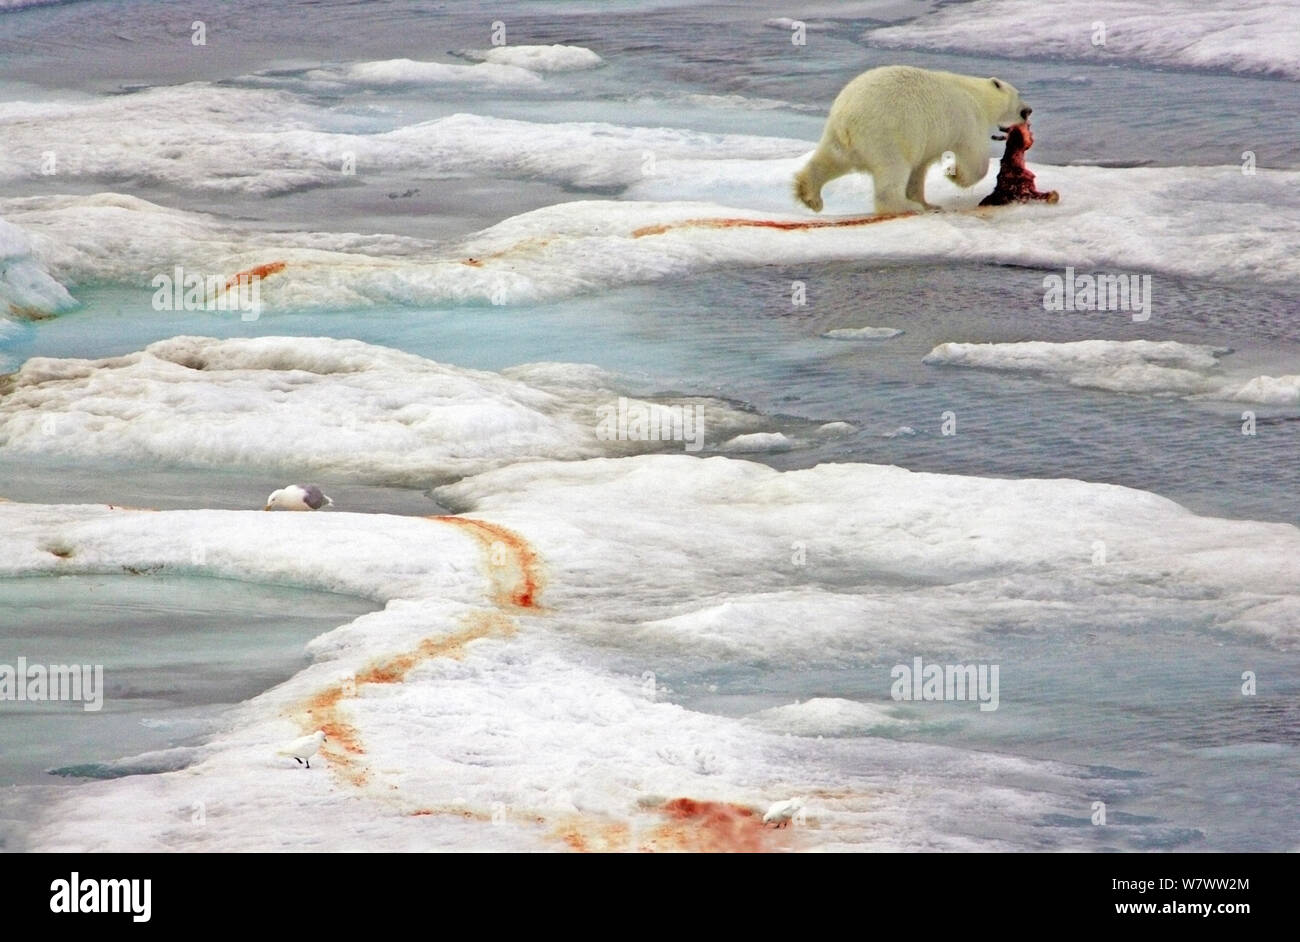 Polar bear (Ursus maritimus) with seal prey, with Glaucous gull (Larus hyperboreus) and Ivory gull (Pagophila eburnea), Franz Josef Land, arctic Russia. Stock Photo